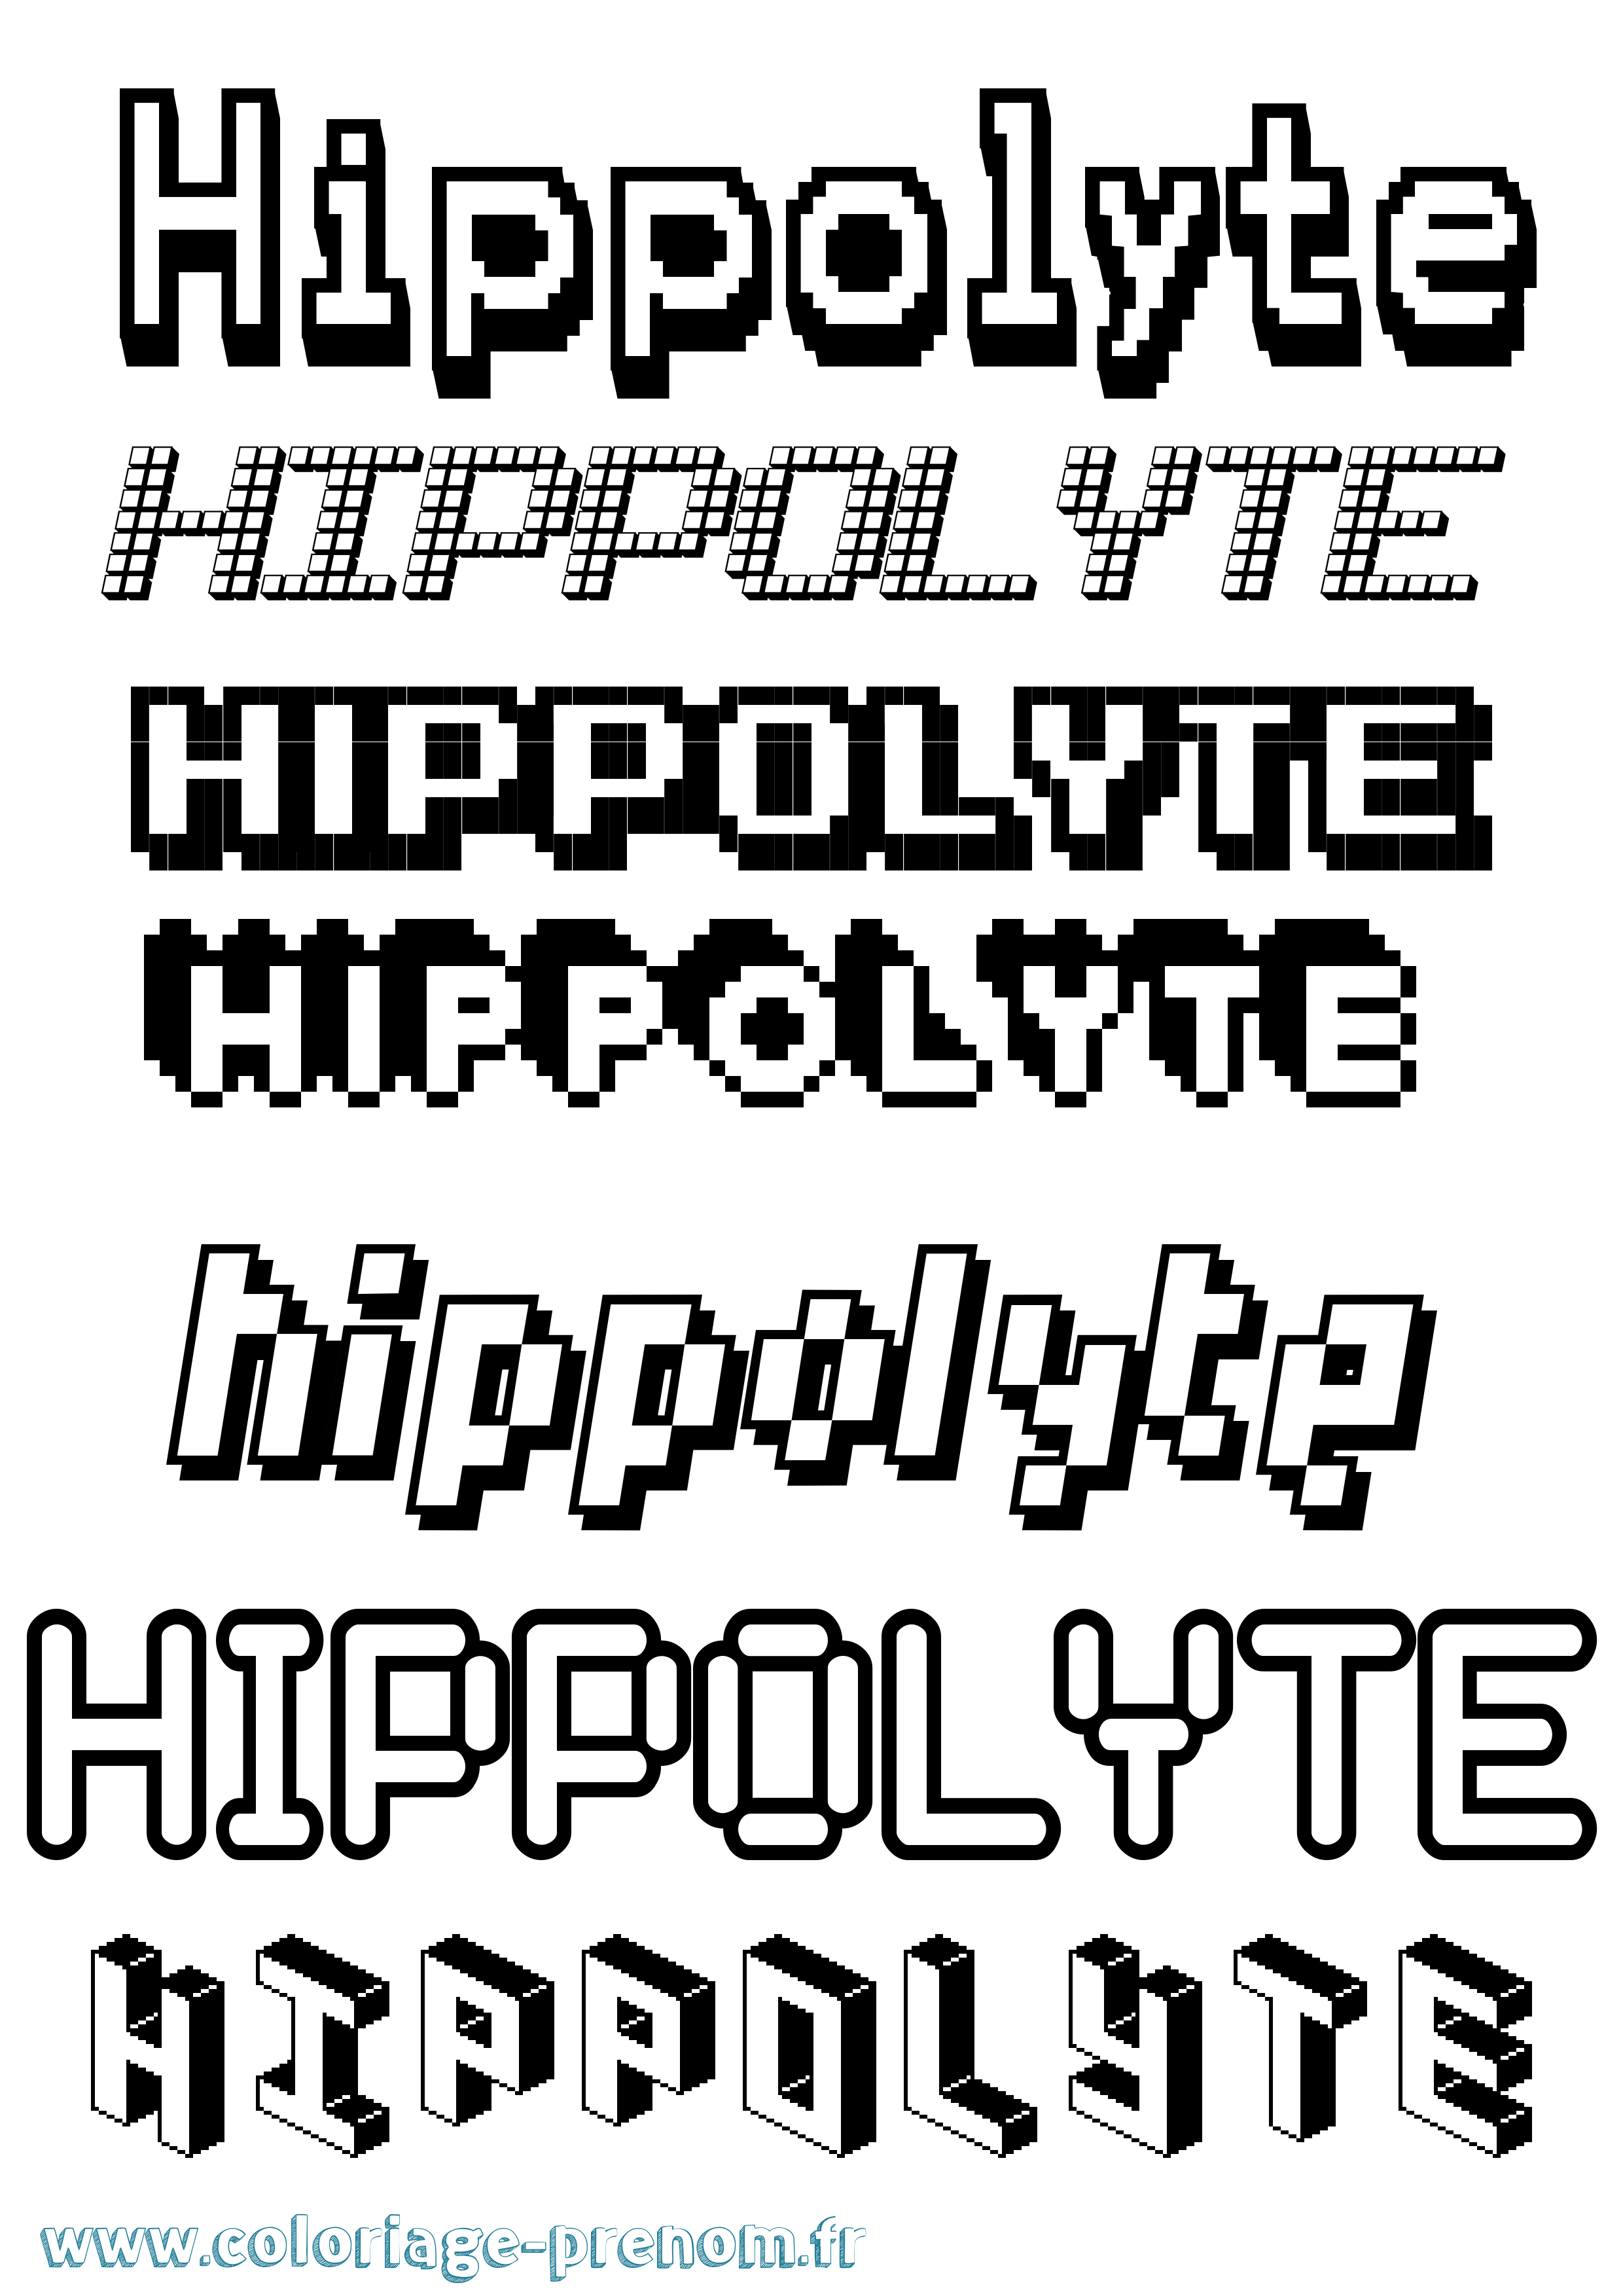 Coloriage prénom Hippolyte Pixel